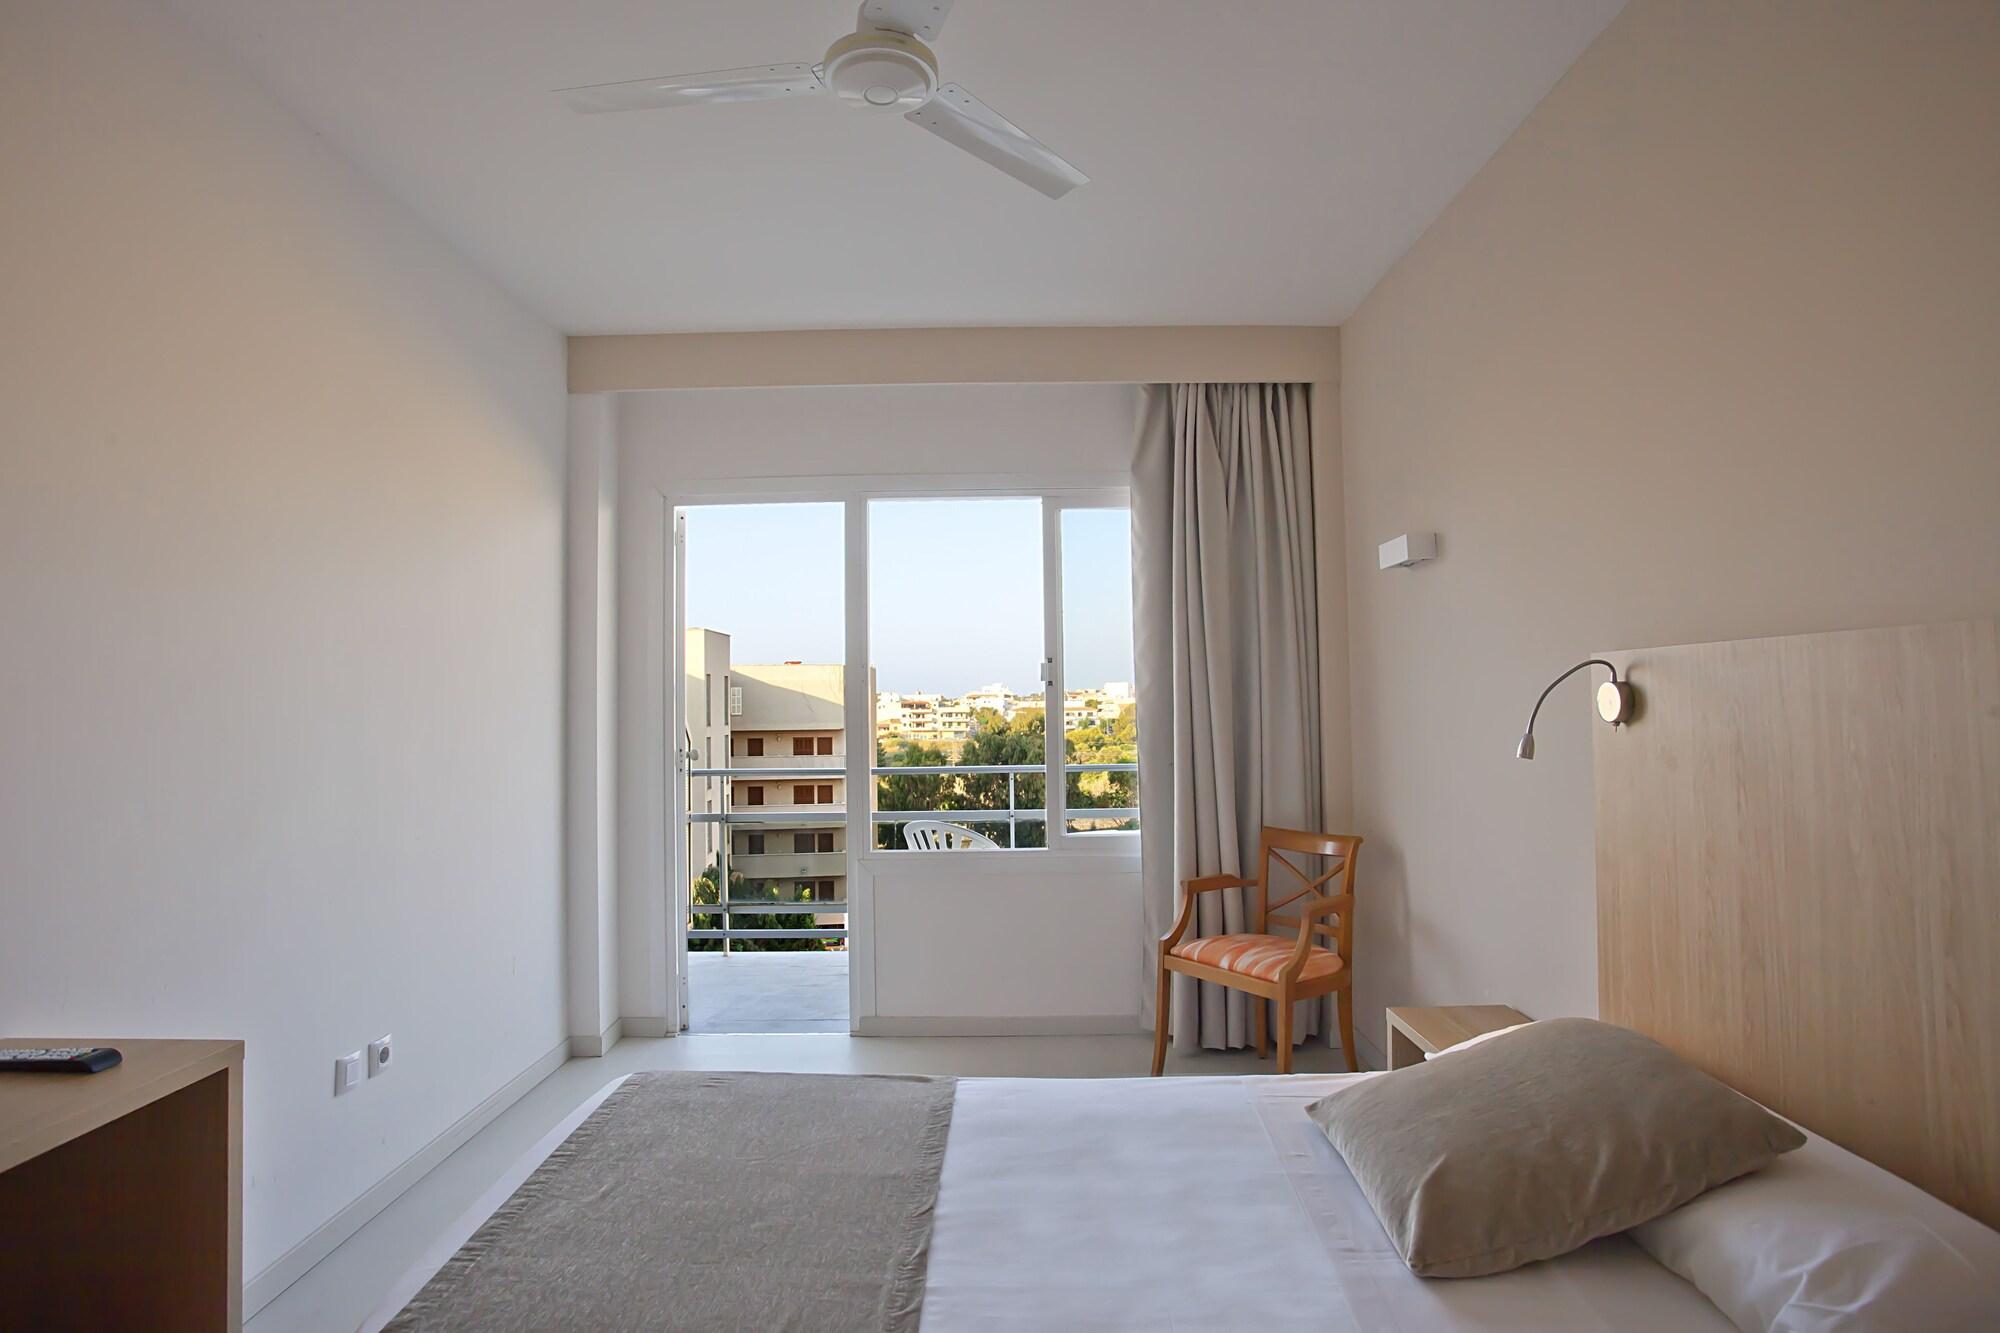 Playamar Hotel&Apartamentos S'Illot  Exterior foto